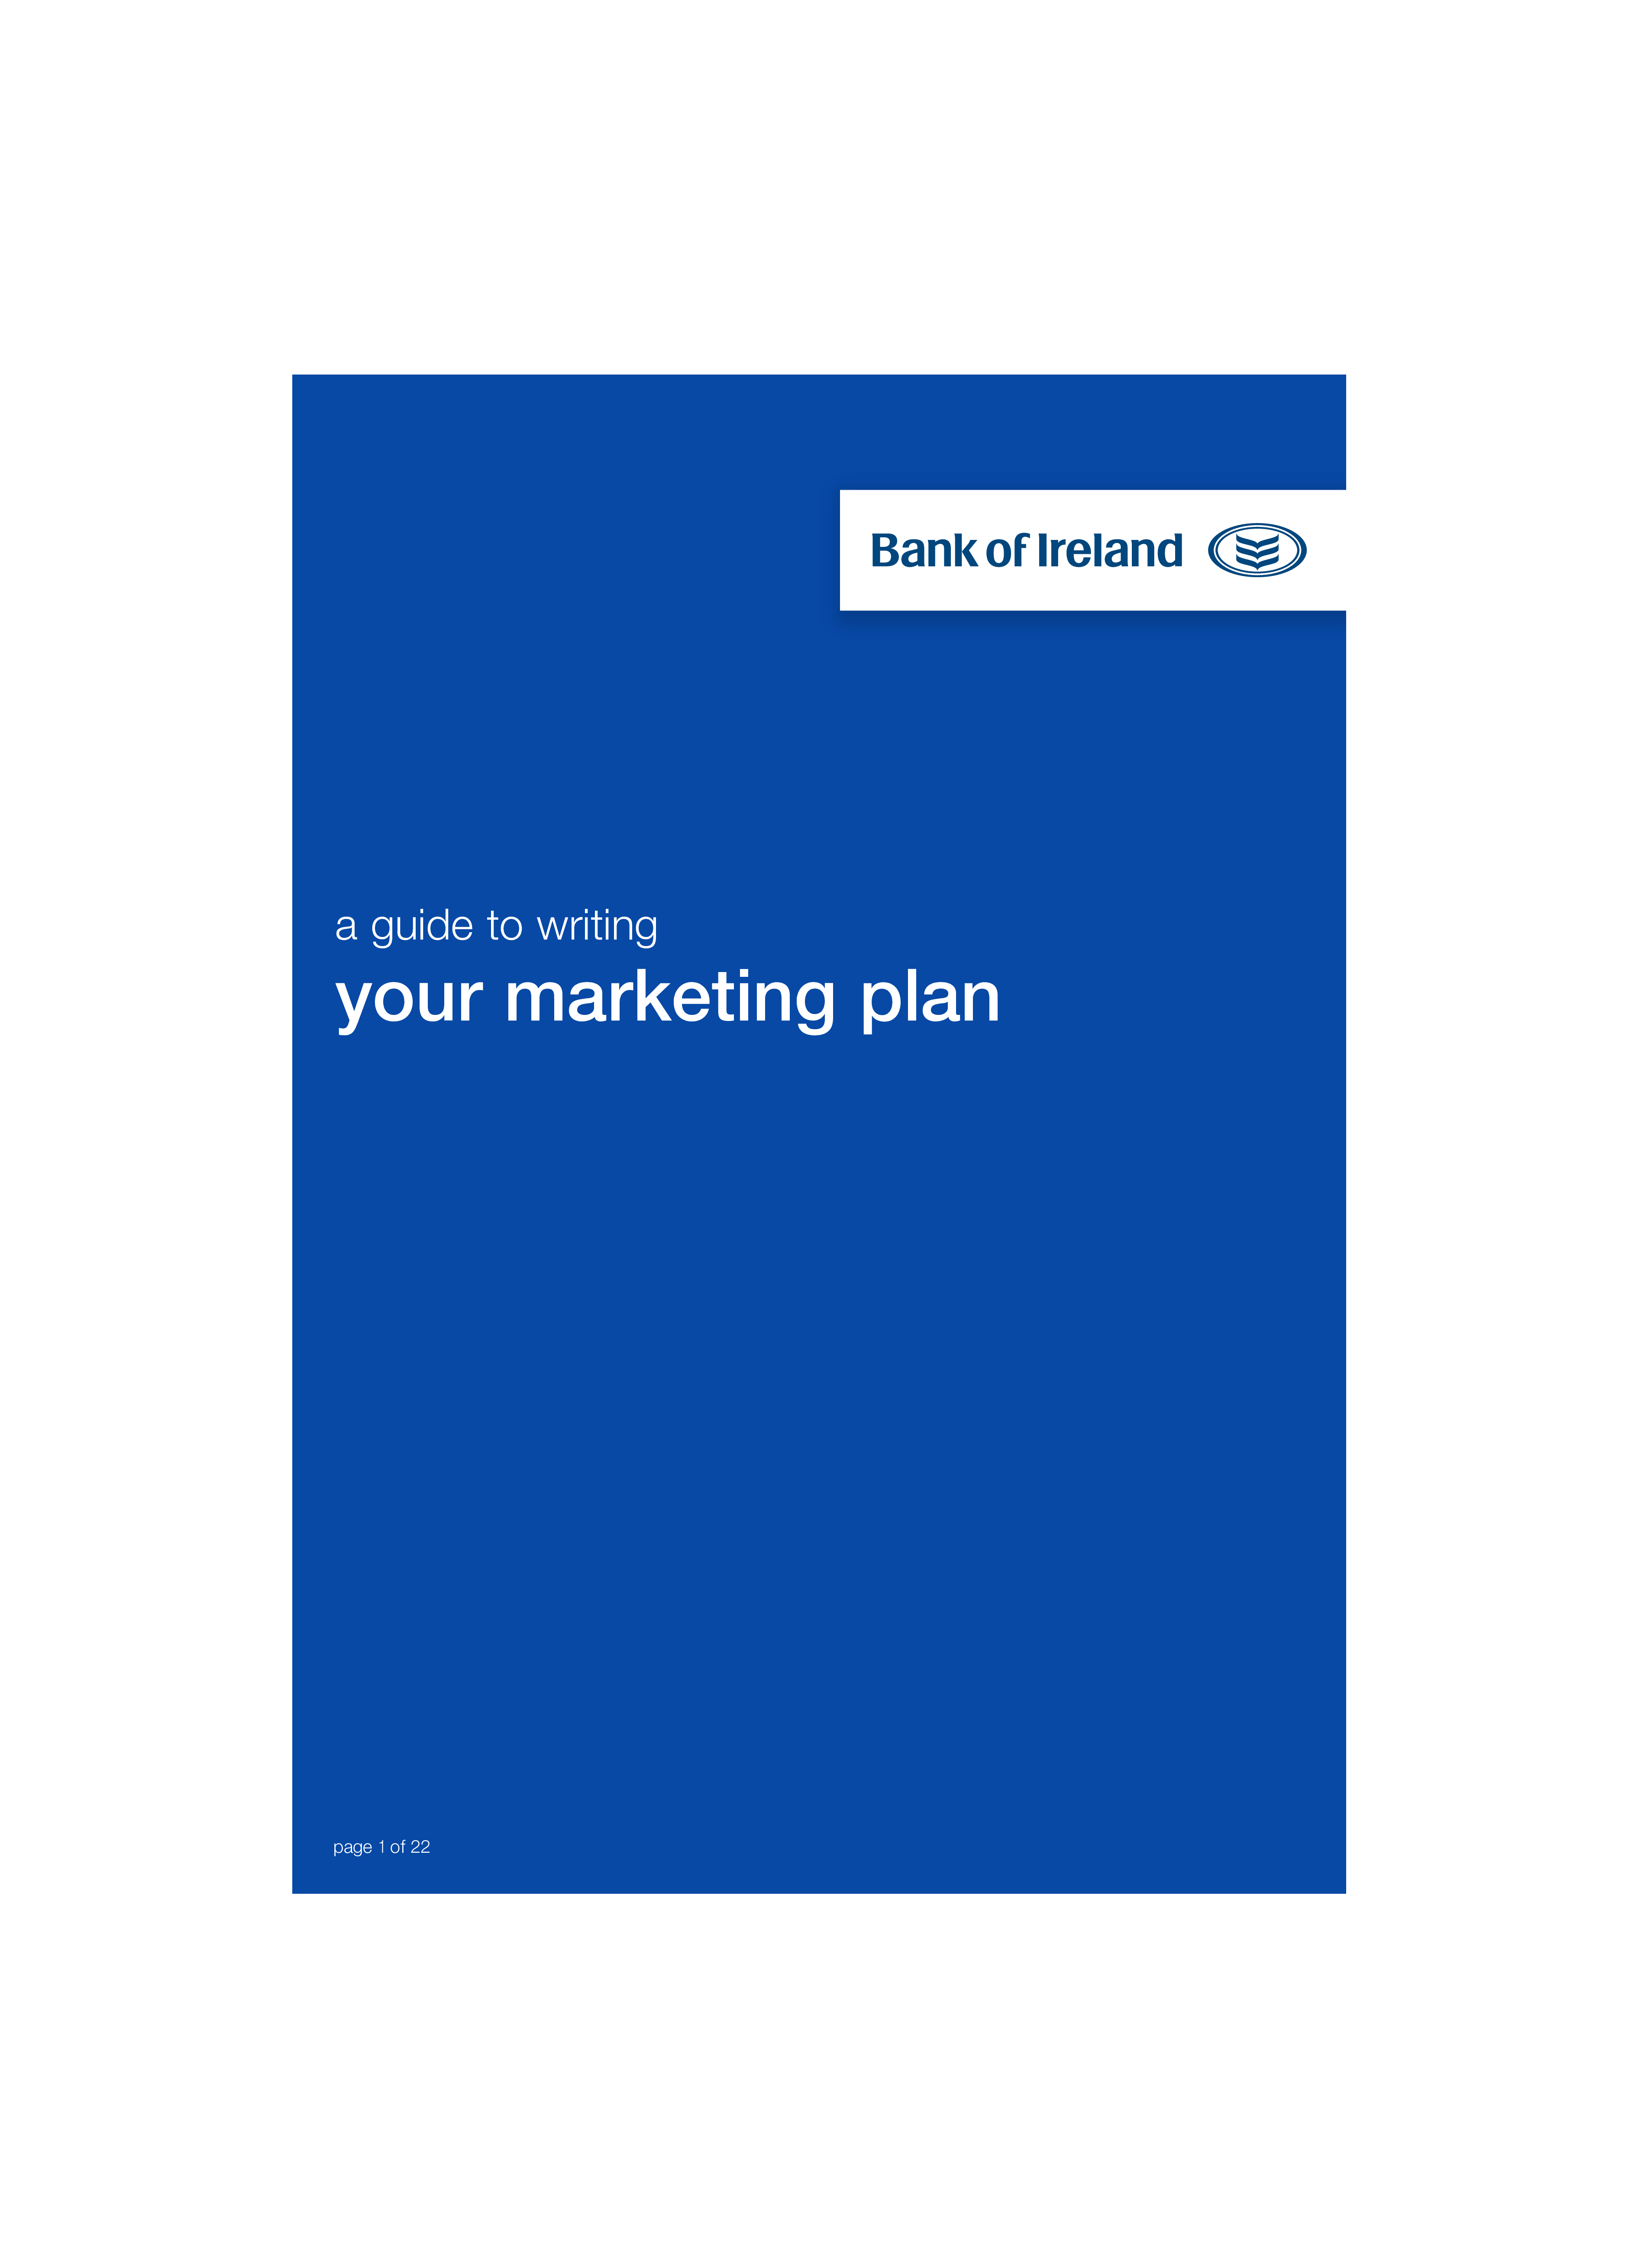 Product Marketing Plan Sample main image